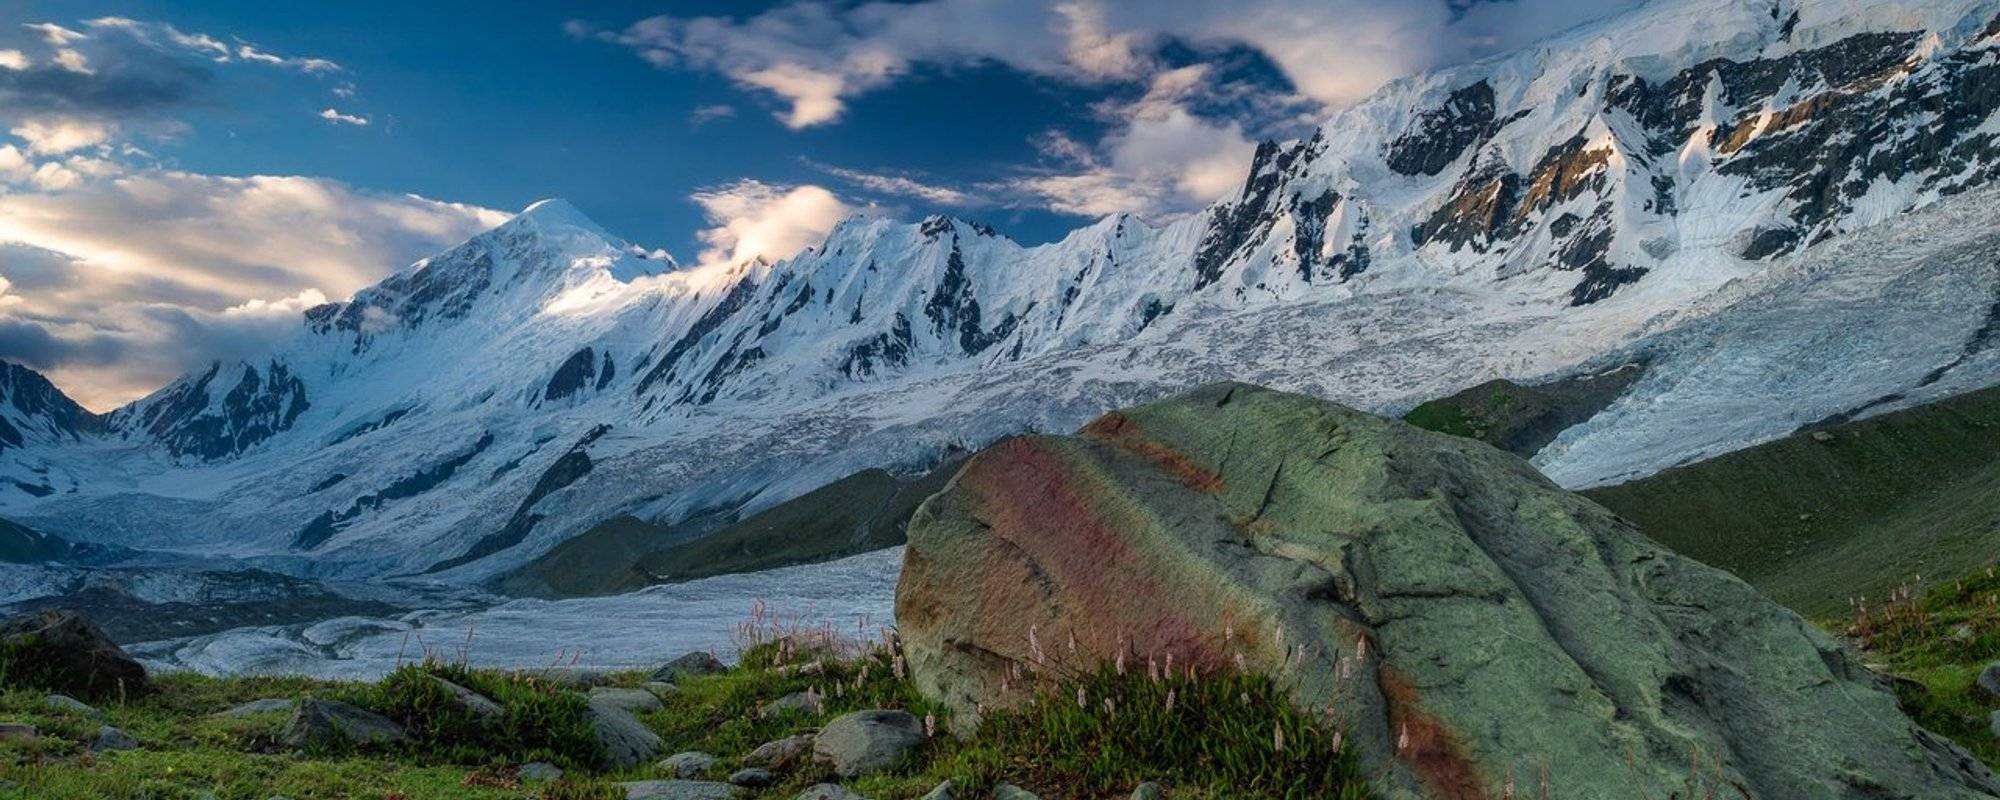 📷 The Land of High Mountains: Pakistan. Day 6. Minapin Glacier and Ice Bridge